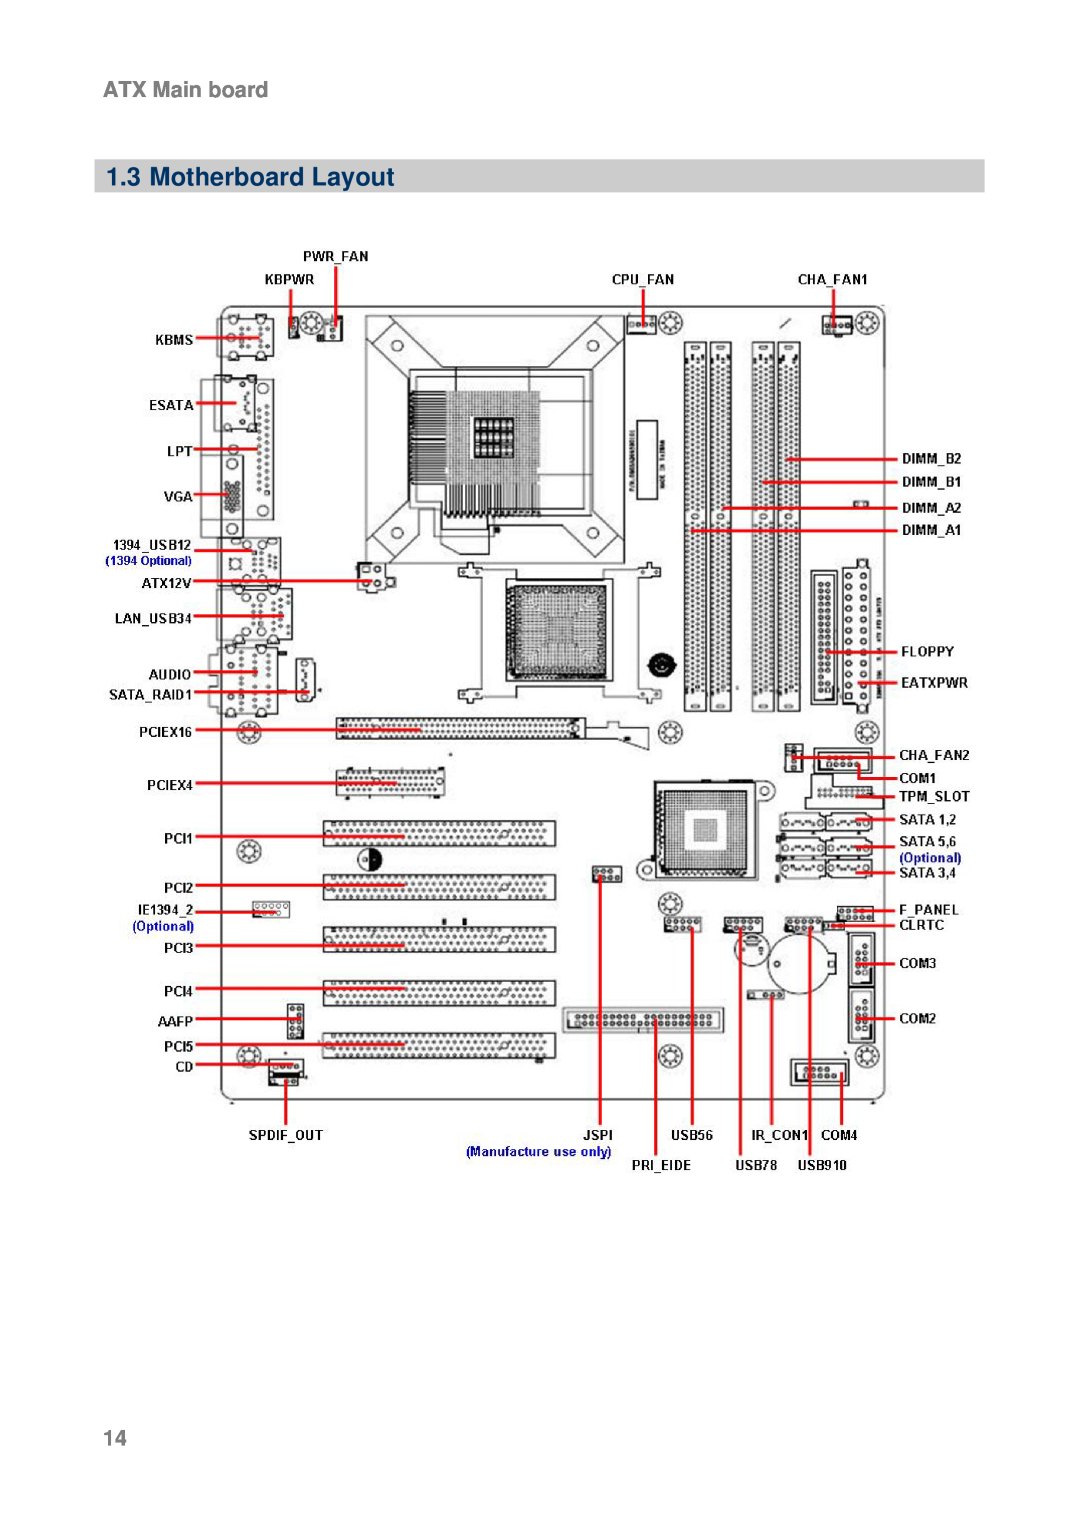 Intel AX965Q user manual Motherboard Layout, ATX Main board 